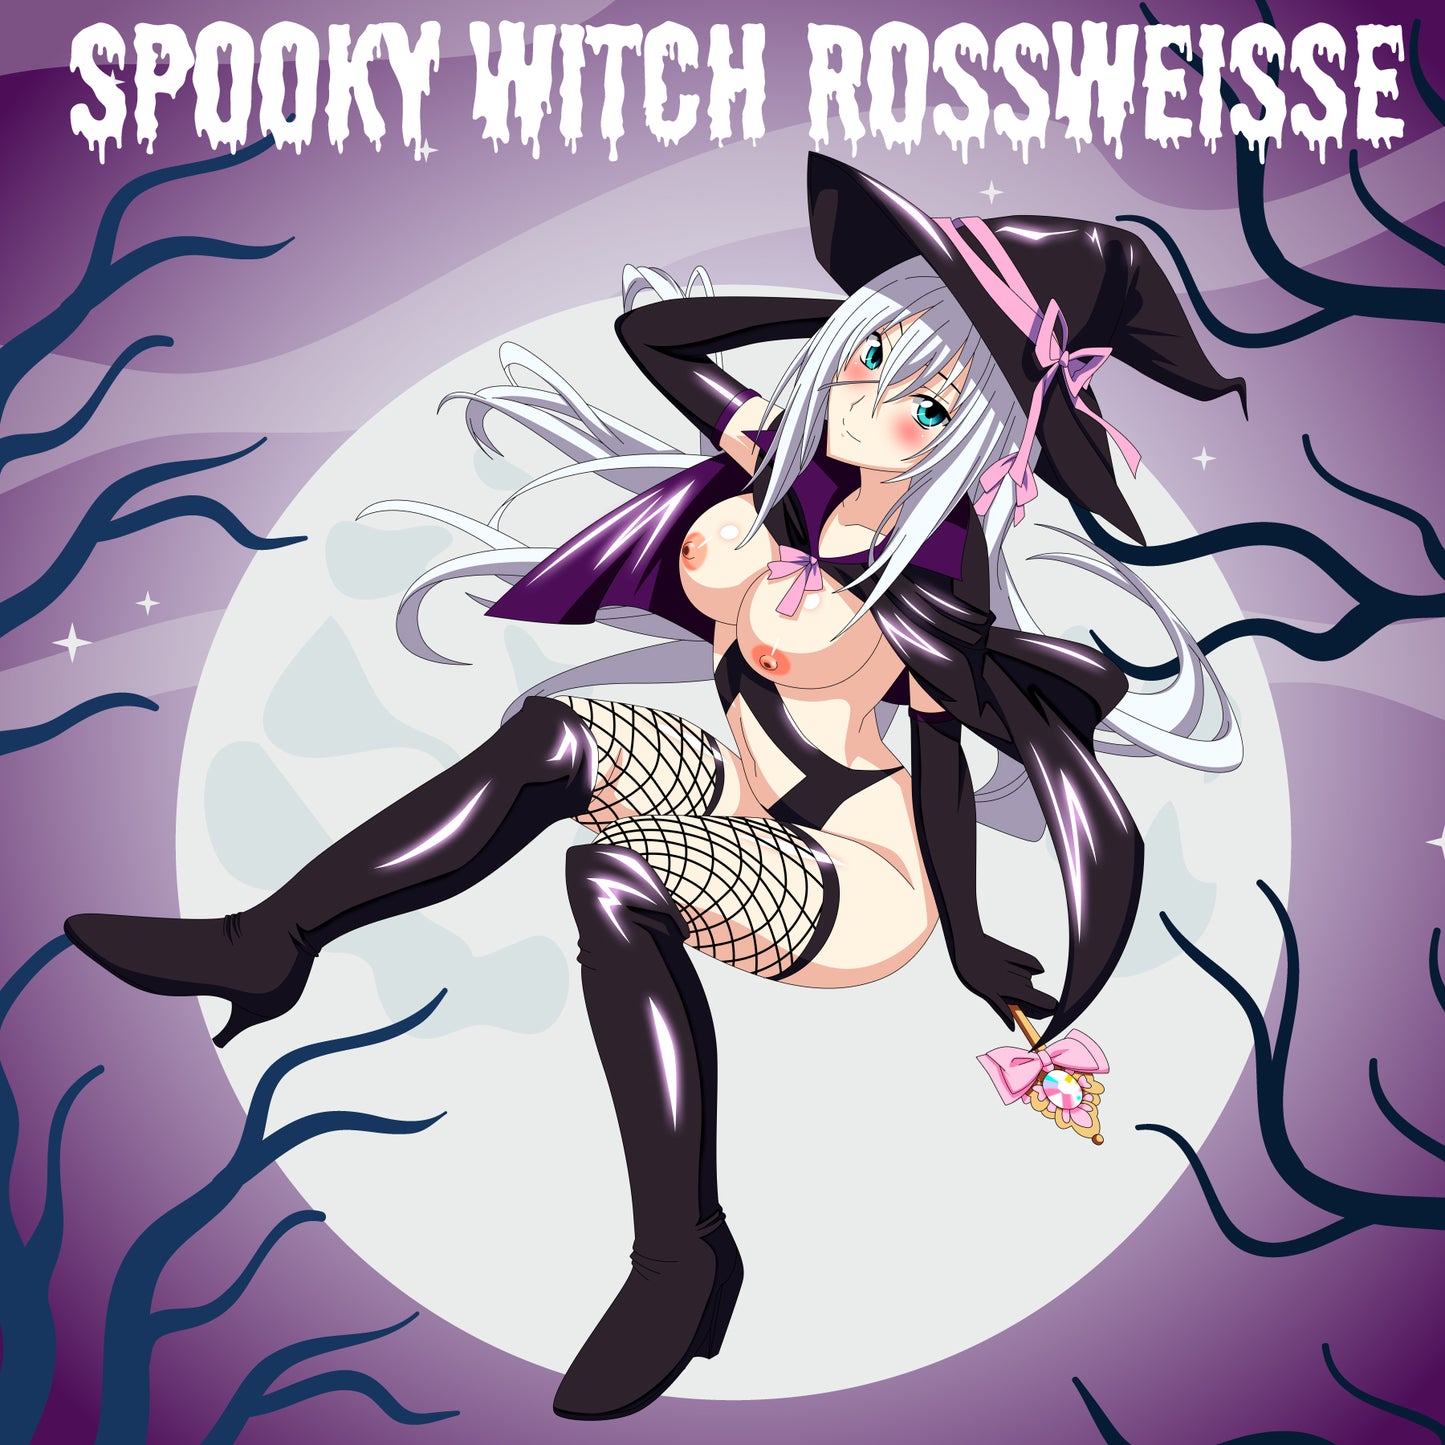 Spooky Witch Rossweisse